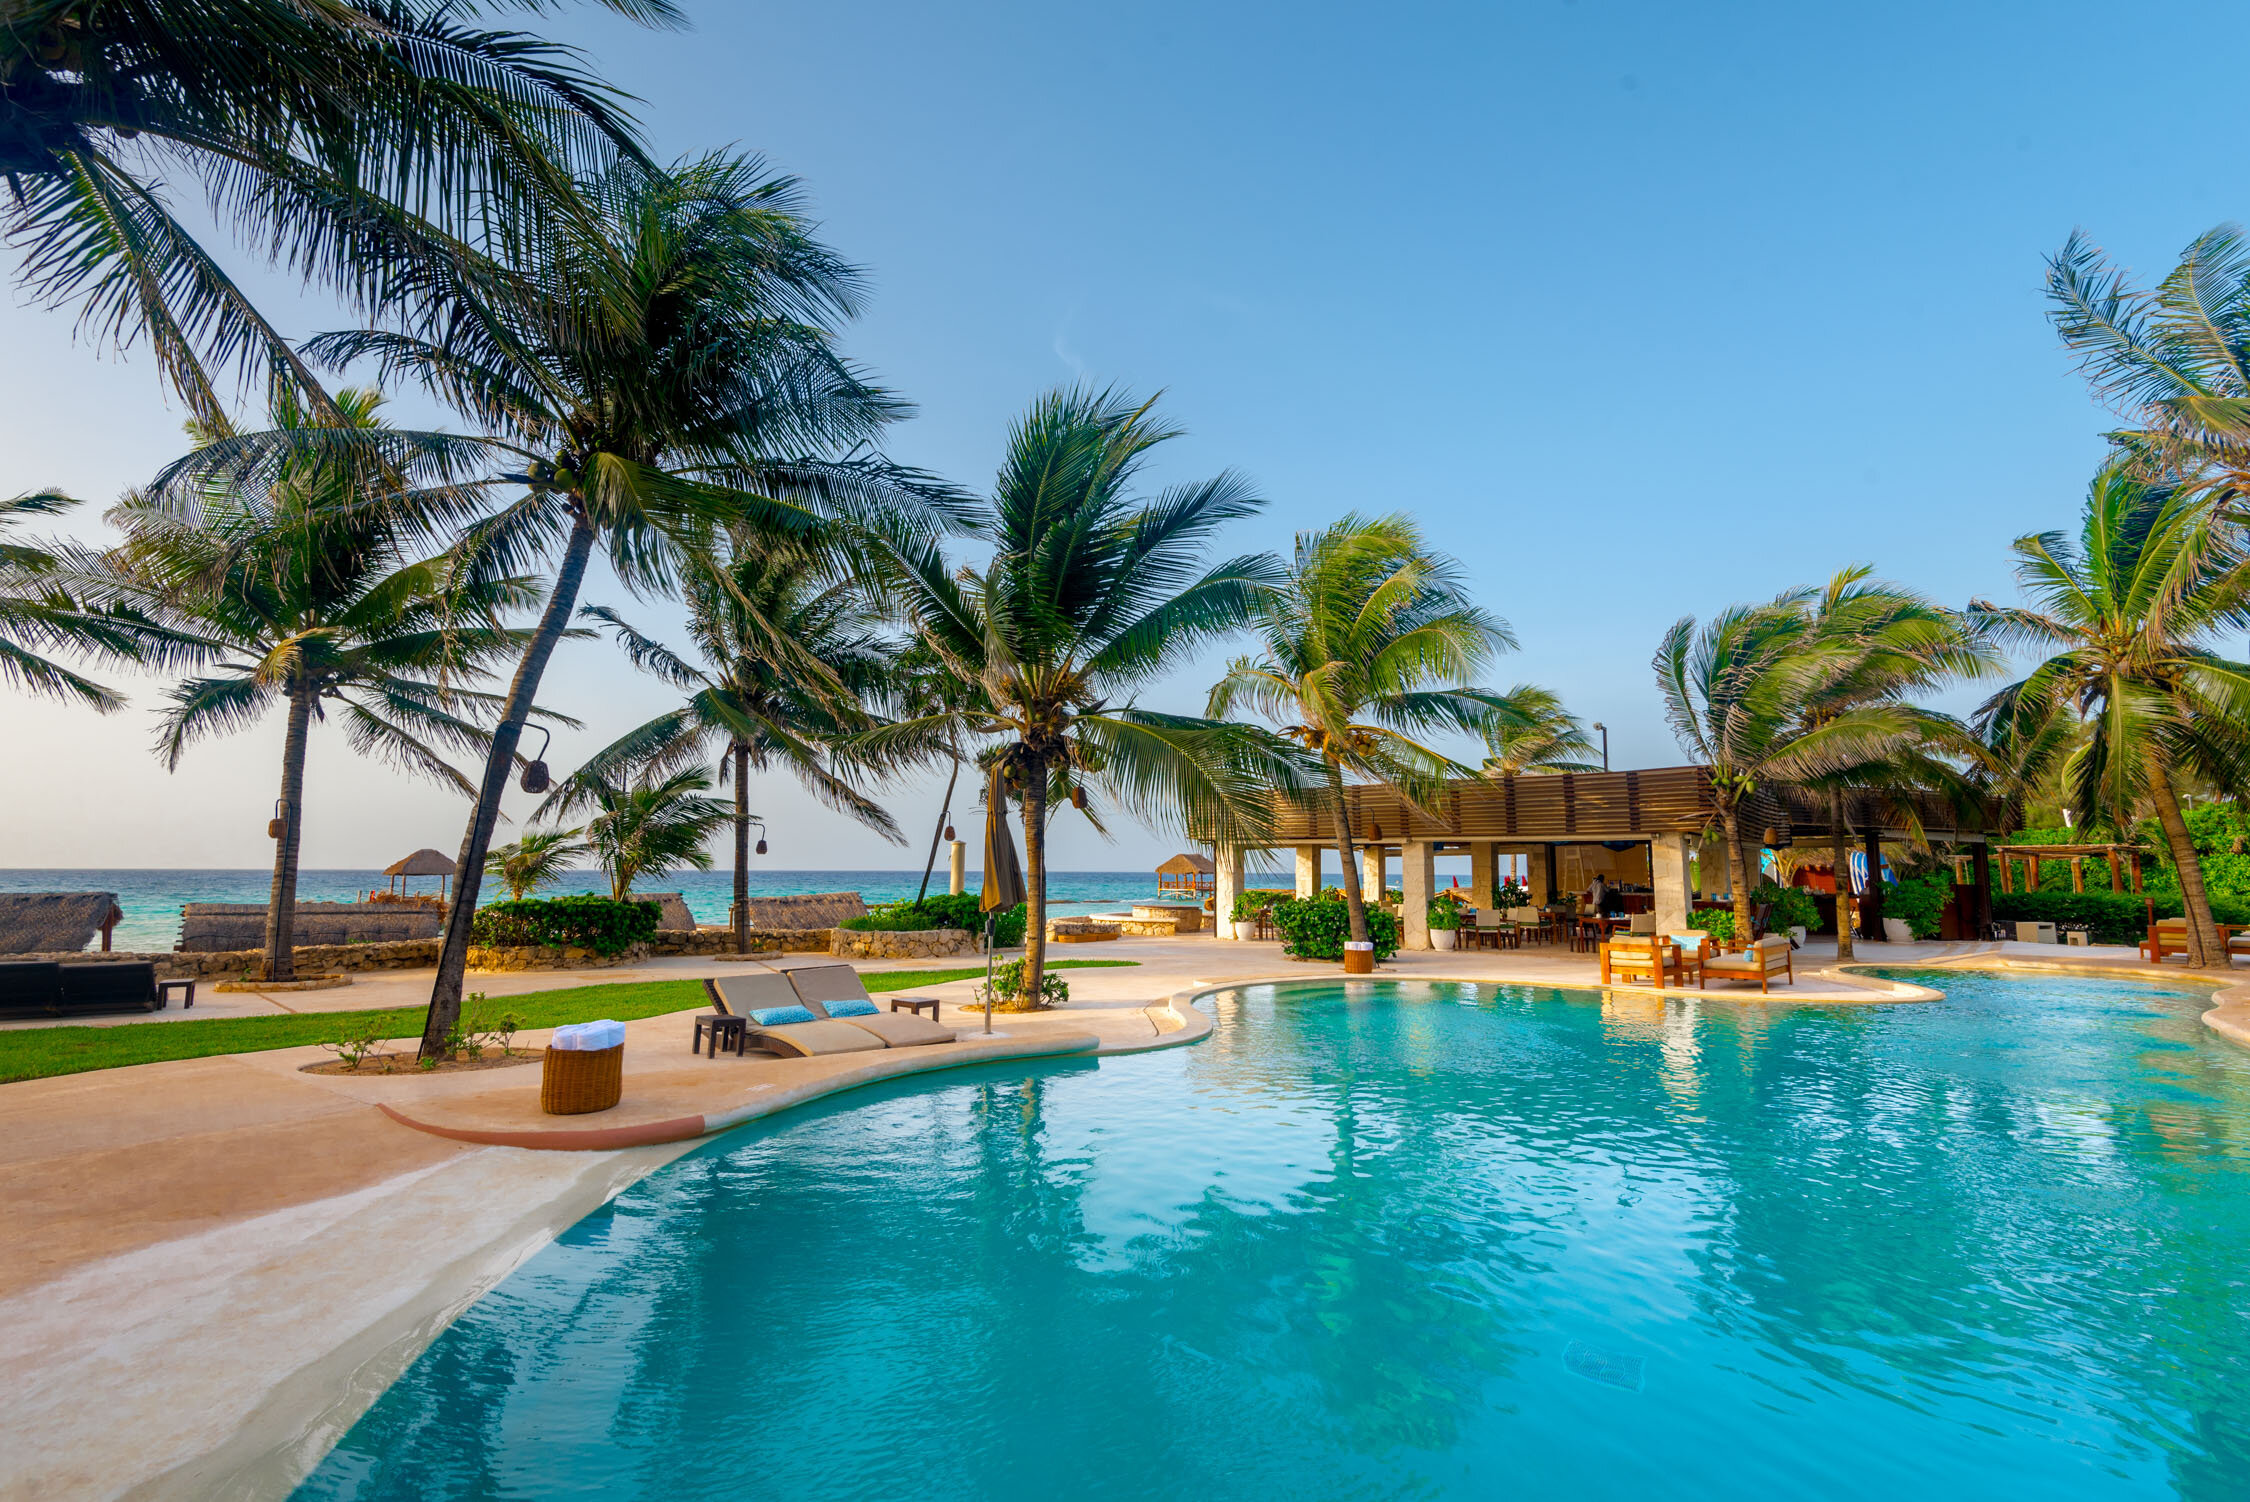 Tasteinhotels Viceroy Riviera Maya Luxury Hotel Playa Del Carmen Cancun Mexico